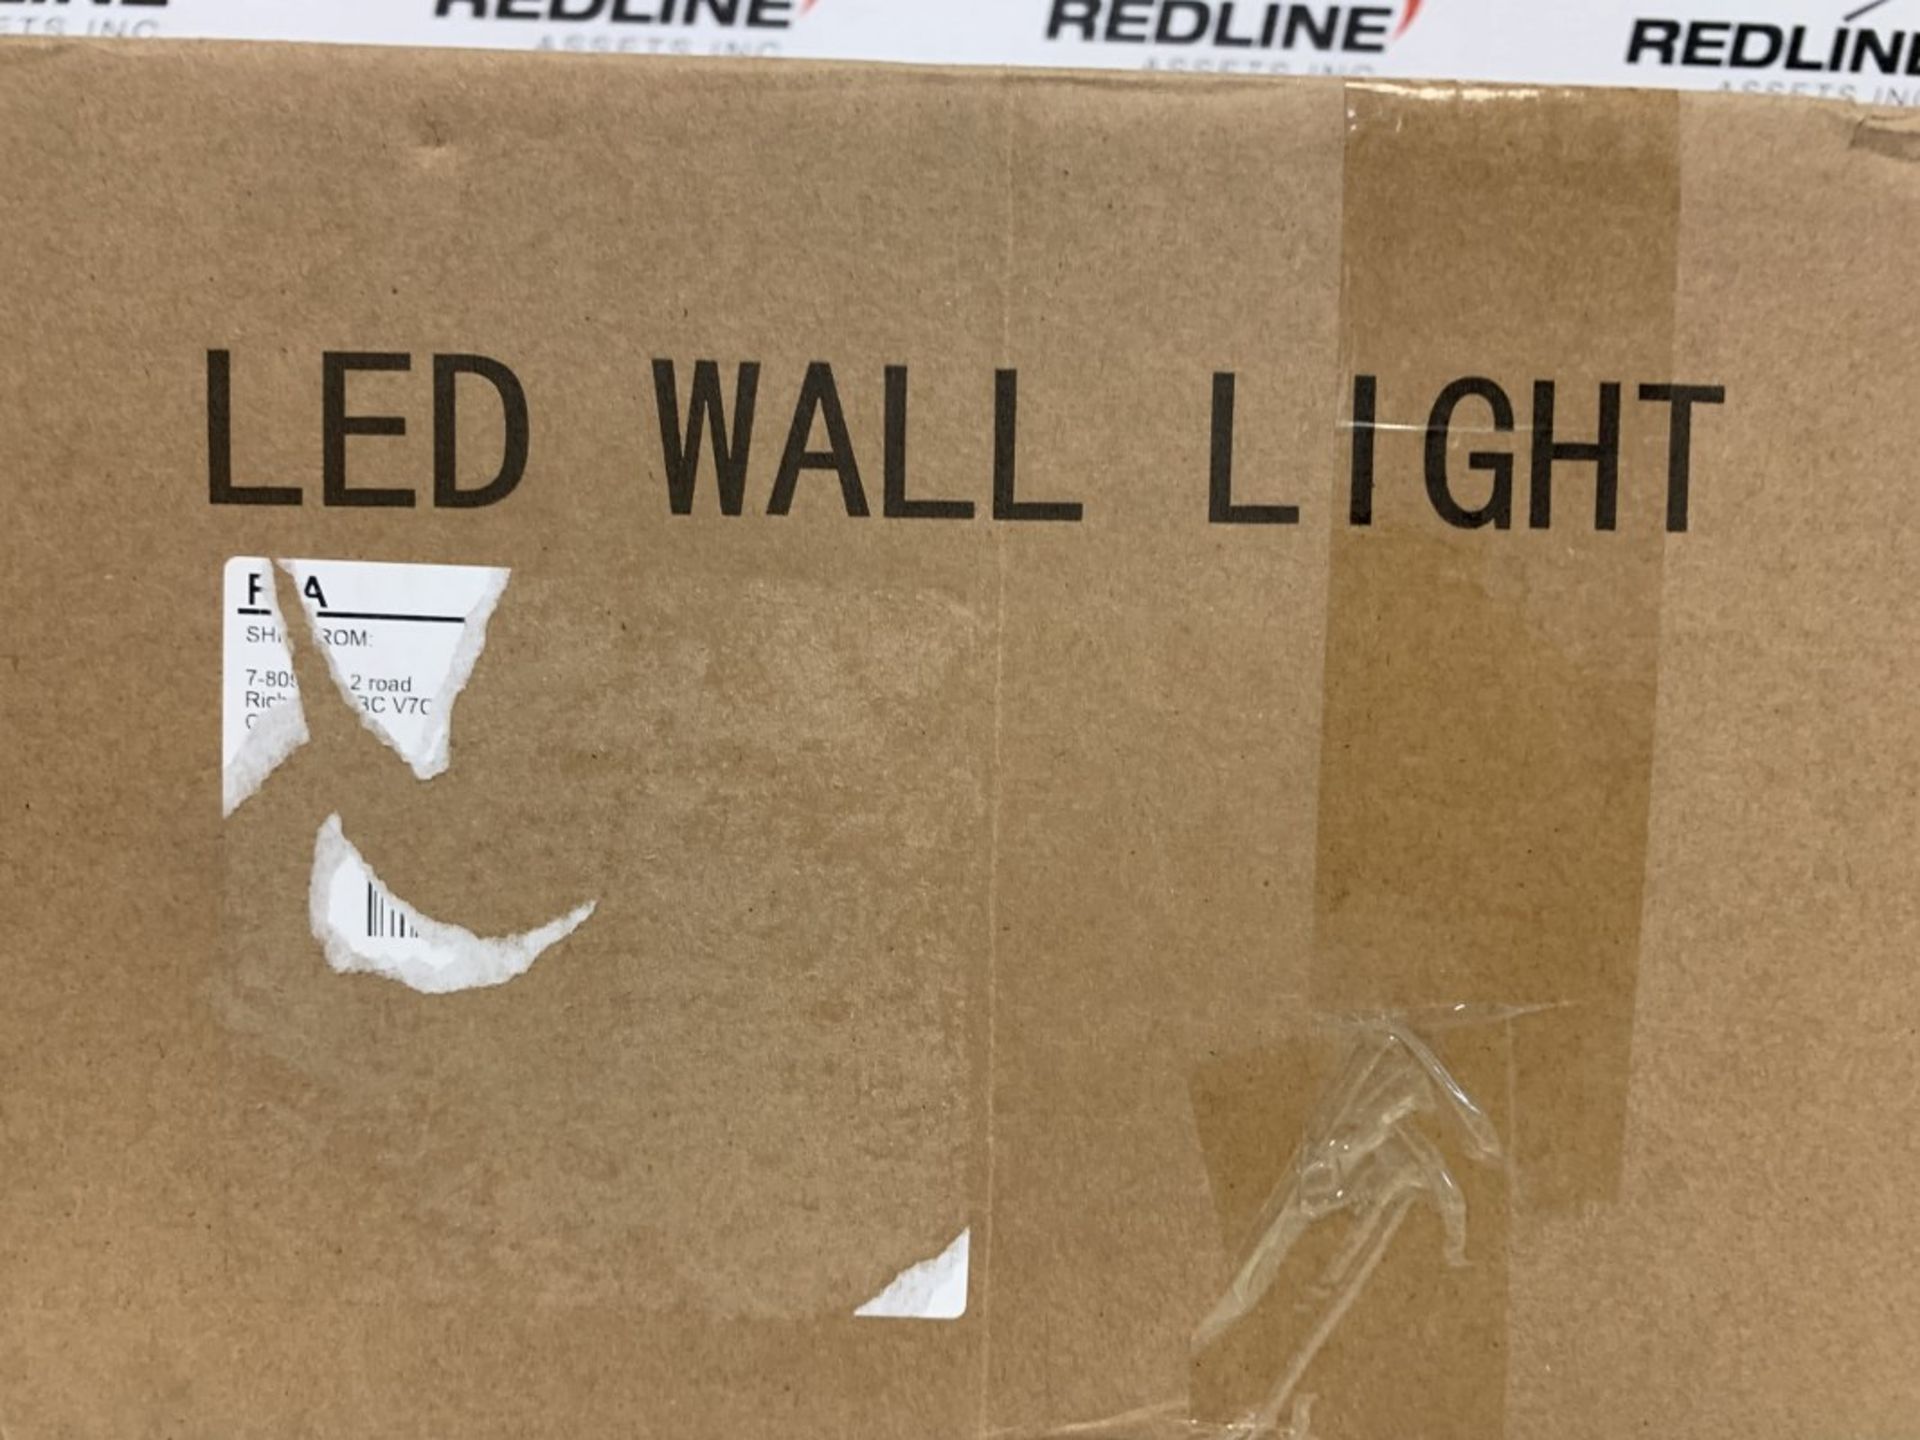 Led Wall Light - X 2 Pcs/Box - Image 2 of 2